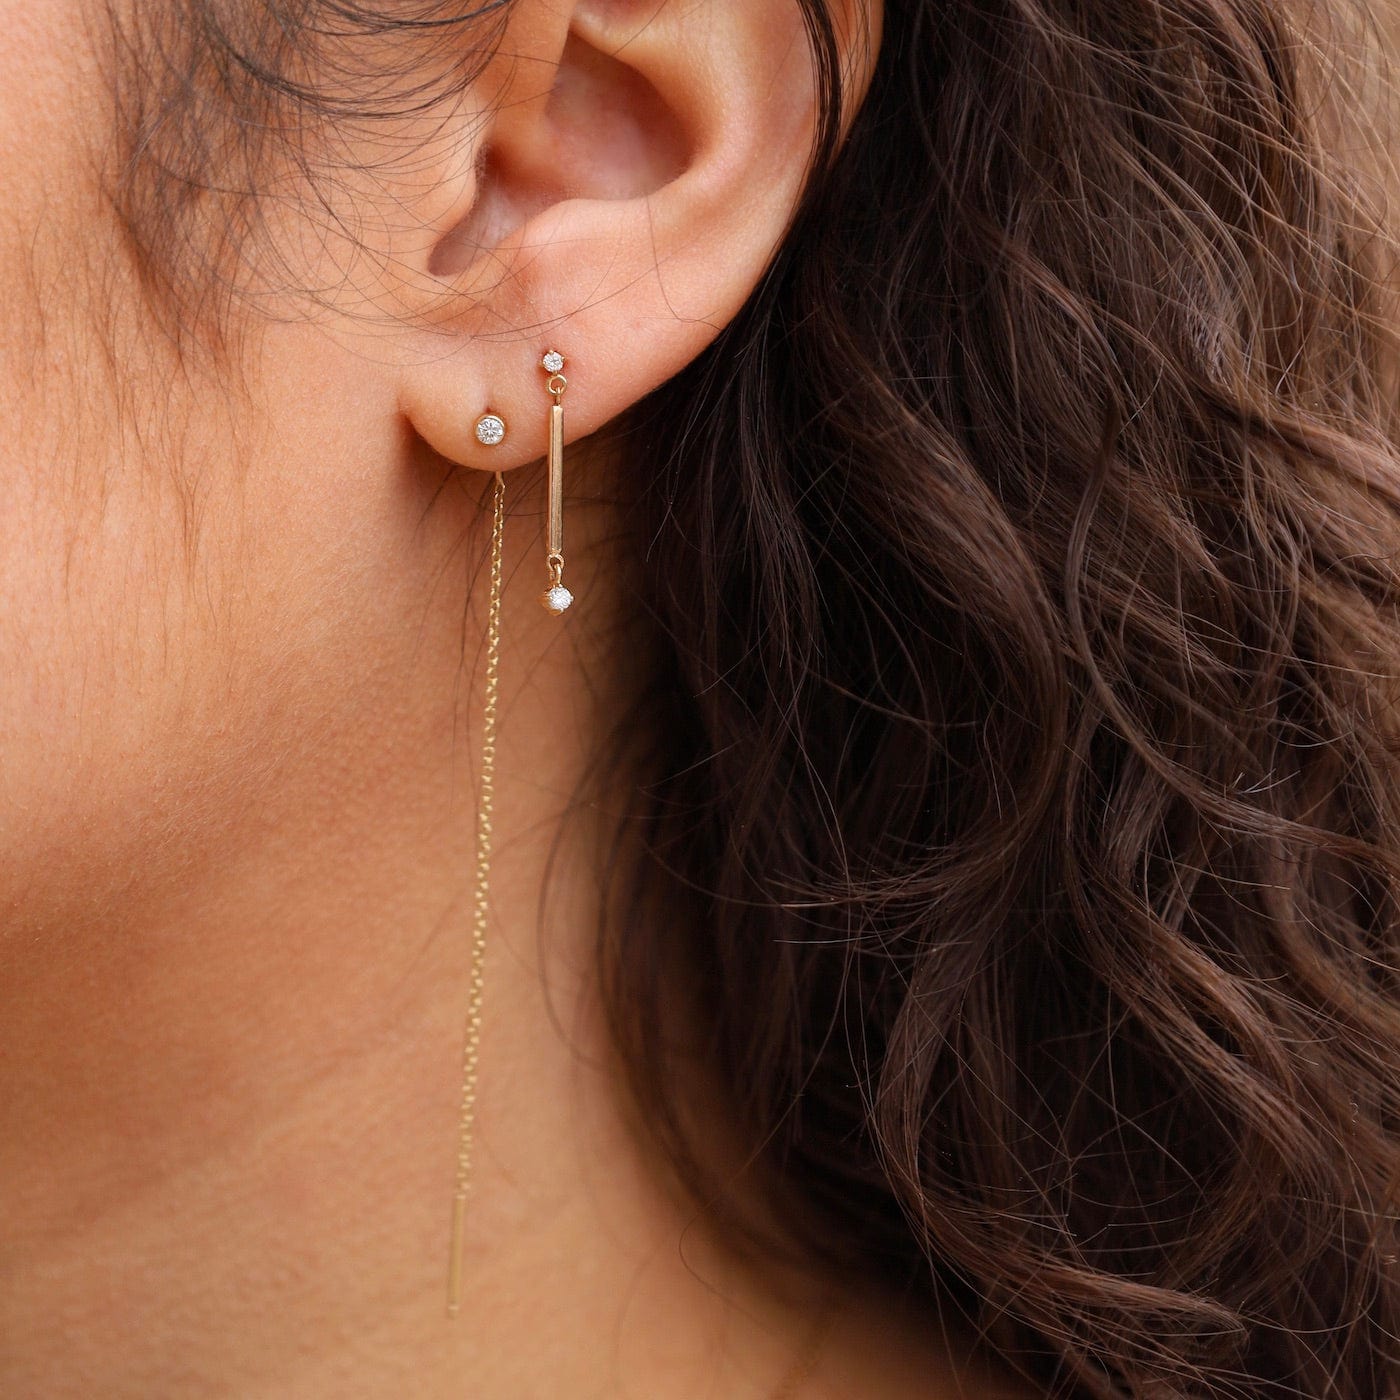 Double piercing stud earrings connected chain | VIE EN BLEU